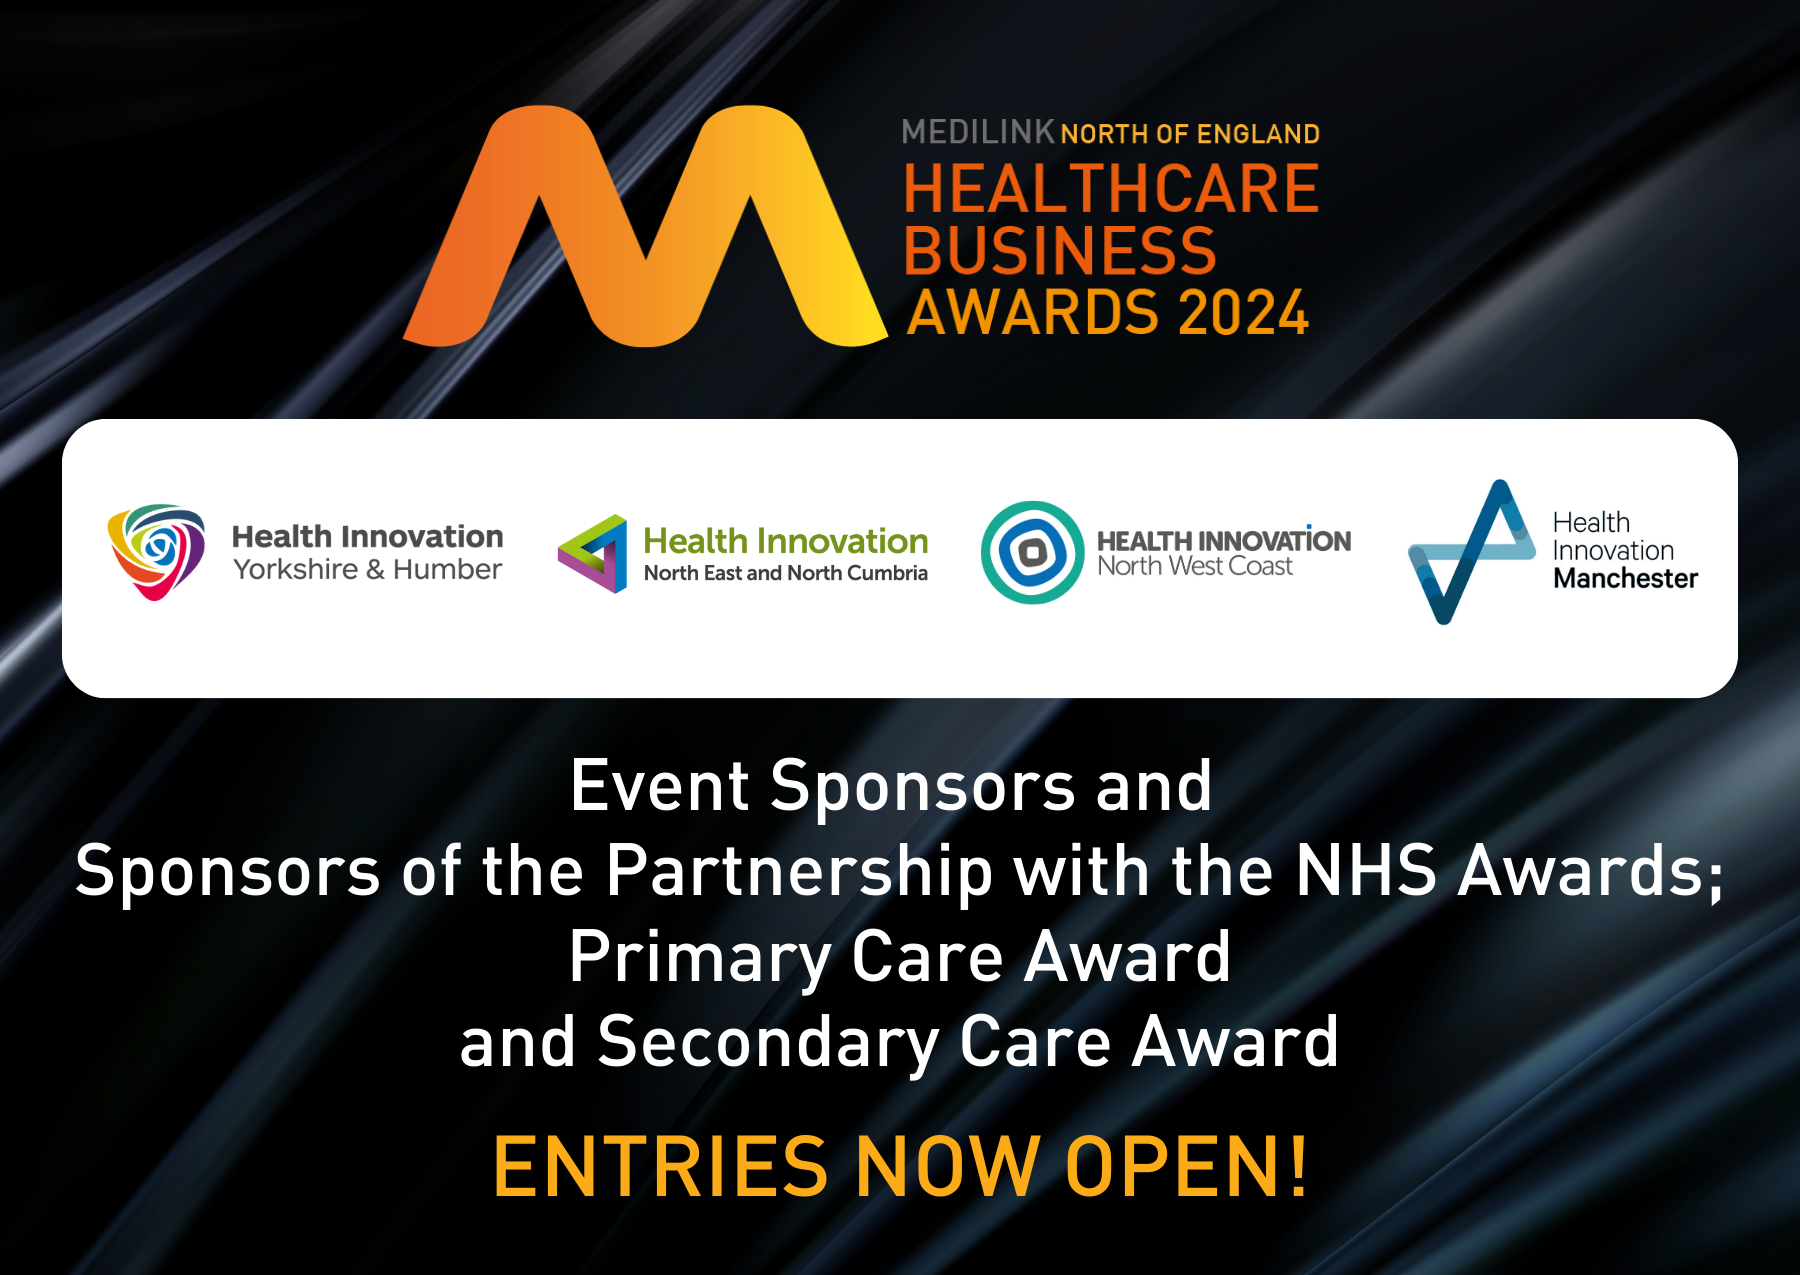 The Medilink Healthcare Business Awards 2024